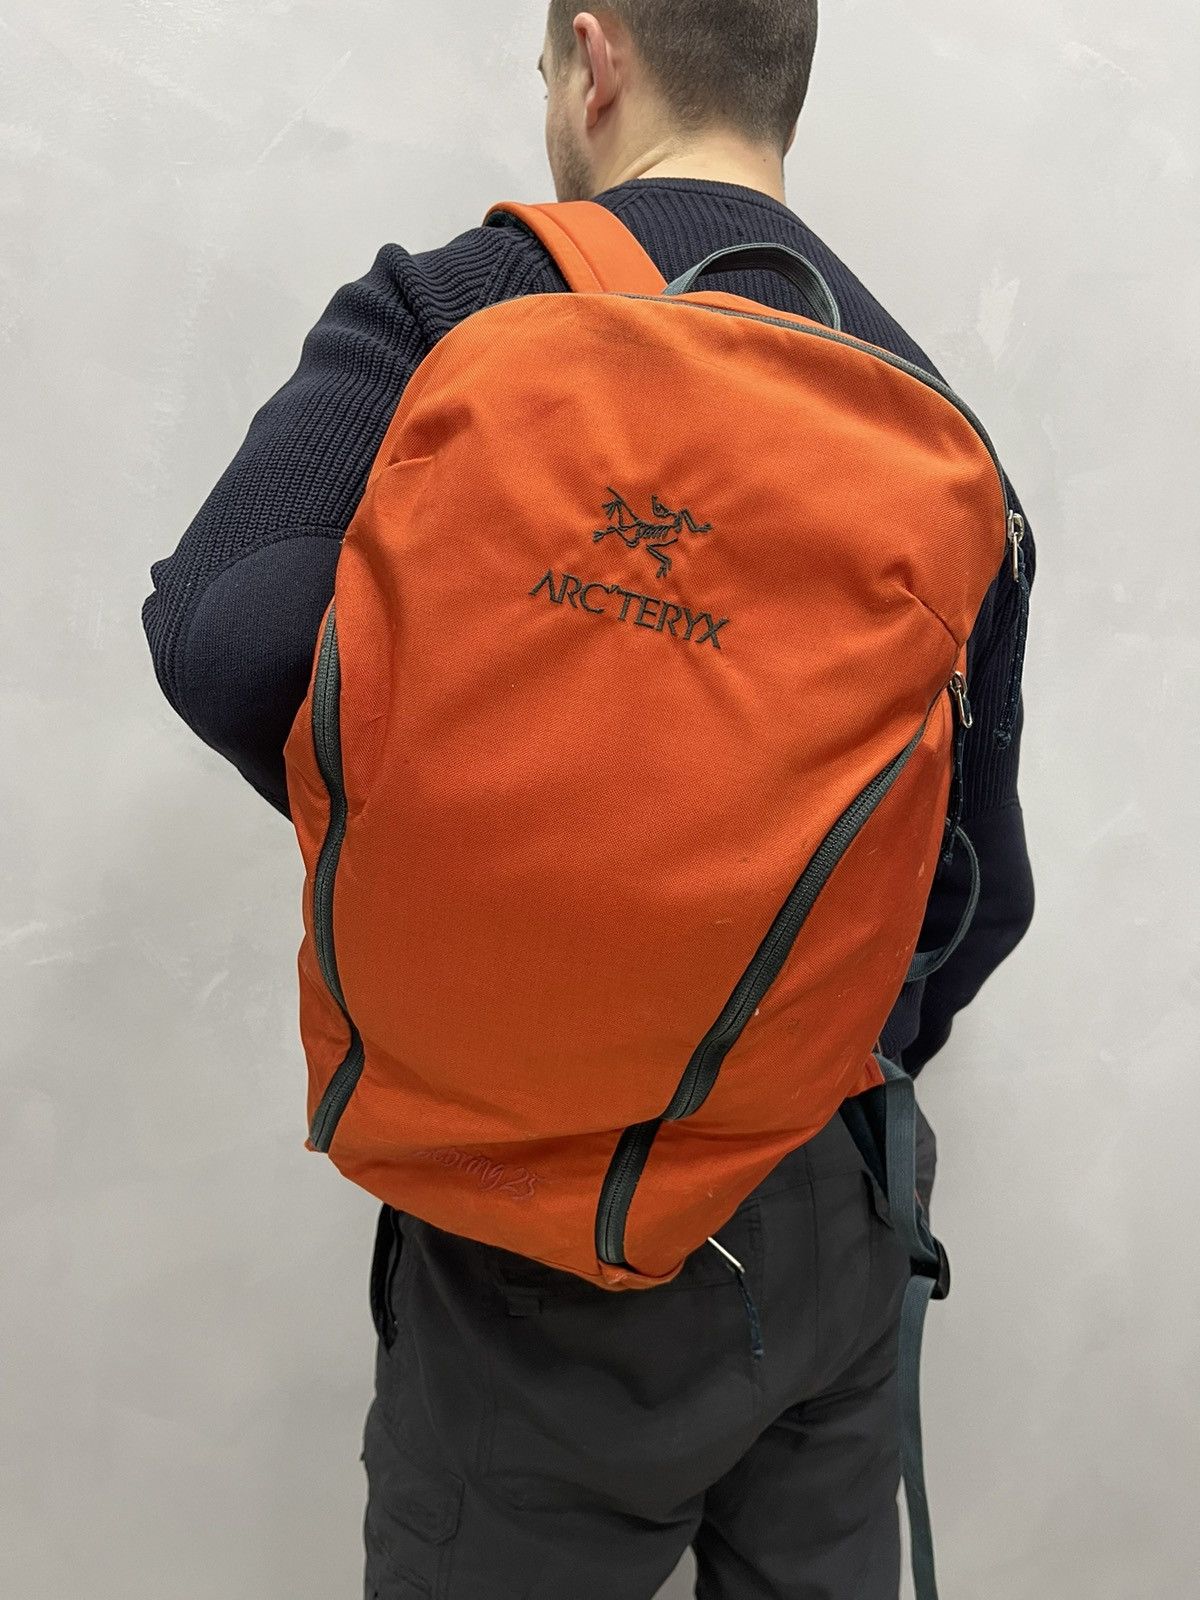 Arc'Teryx Bag ARCTERYX SEBRING 25 orange 🍊 | Grailed